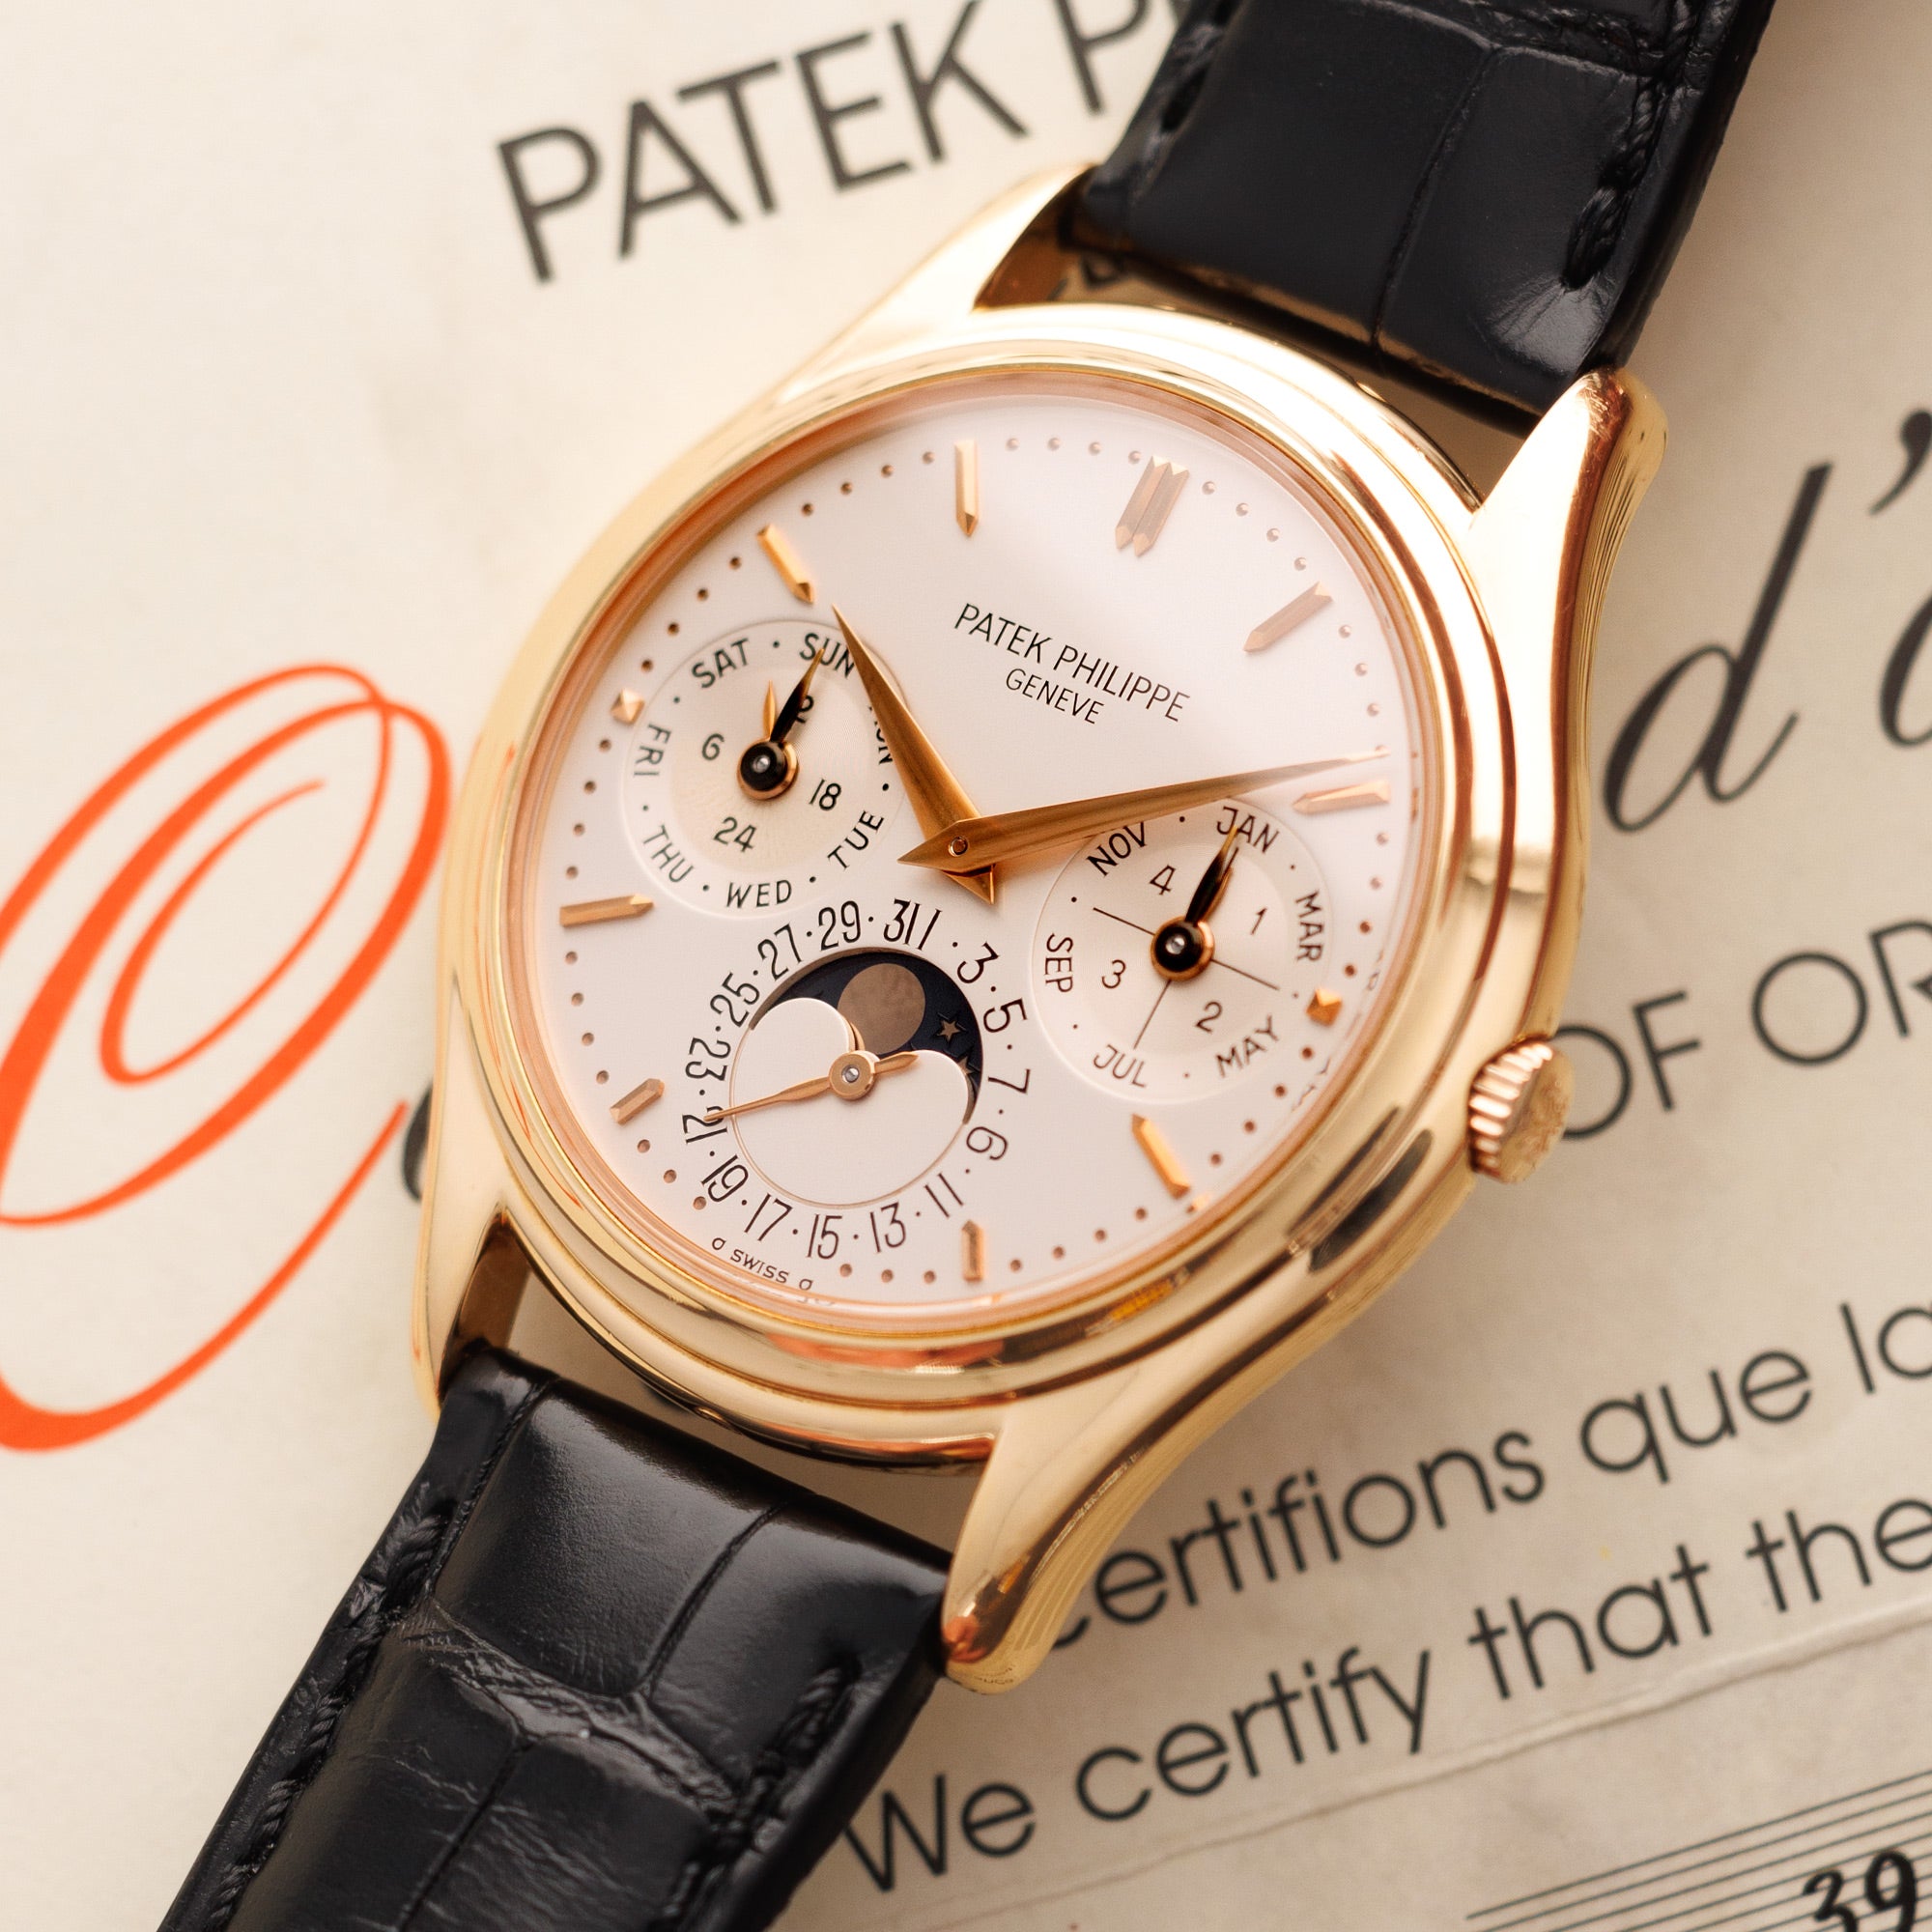 Patek Philippe - Patek Philippe Rose Gold Perpetual Calendar Watch Ref. 3940 - The Keystone Watches